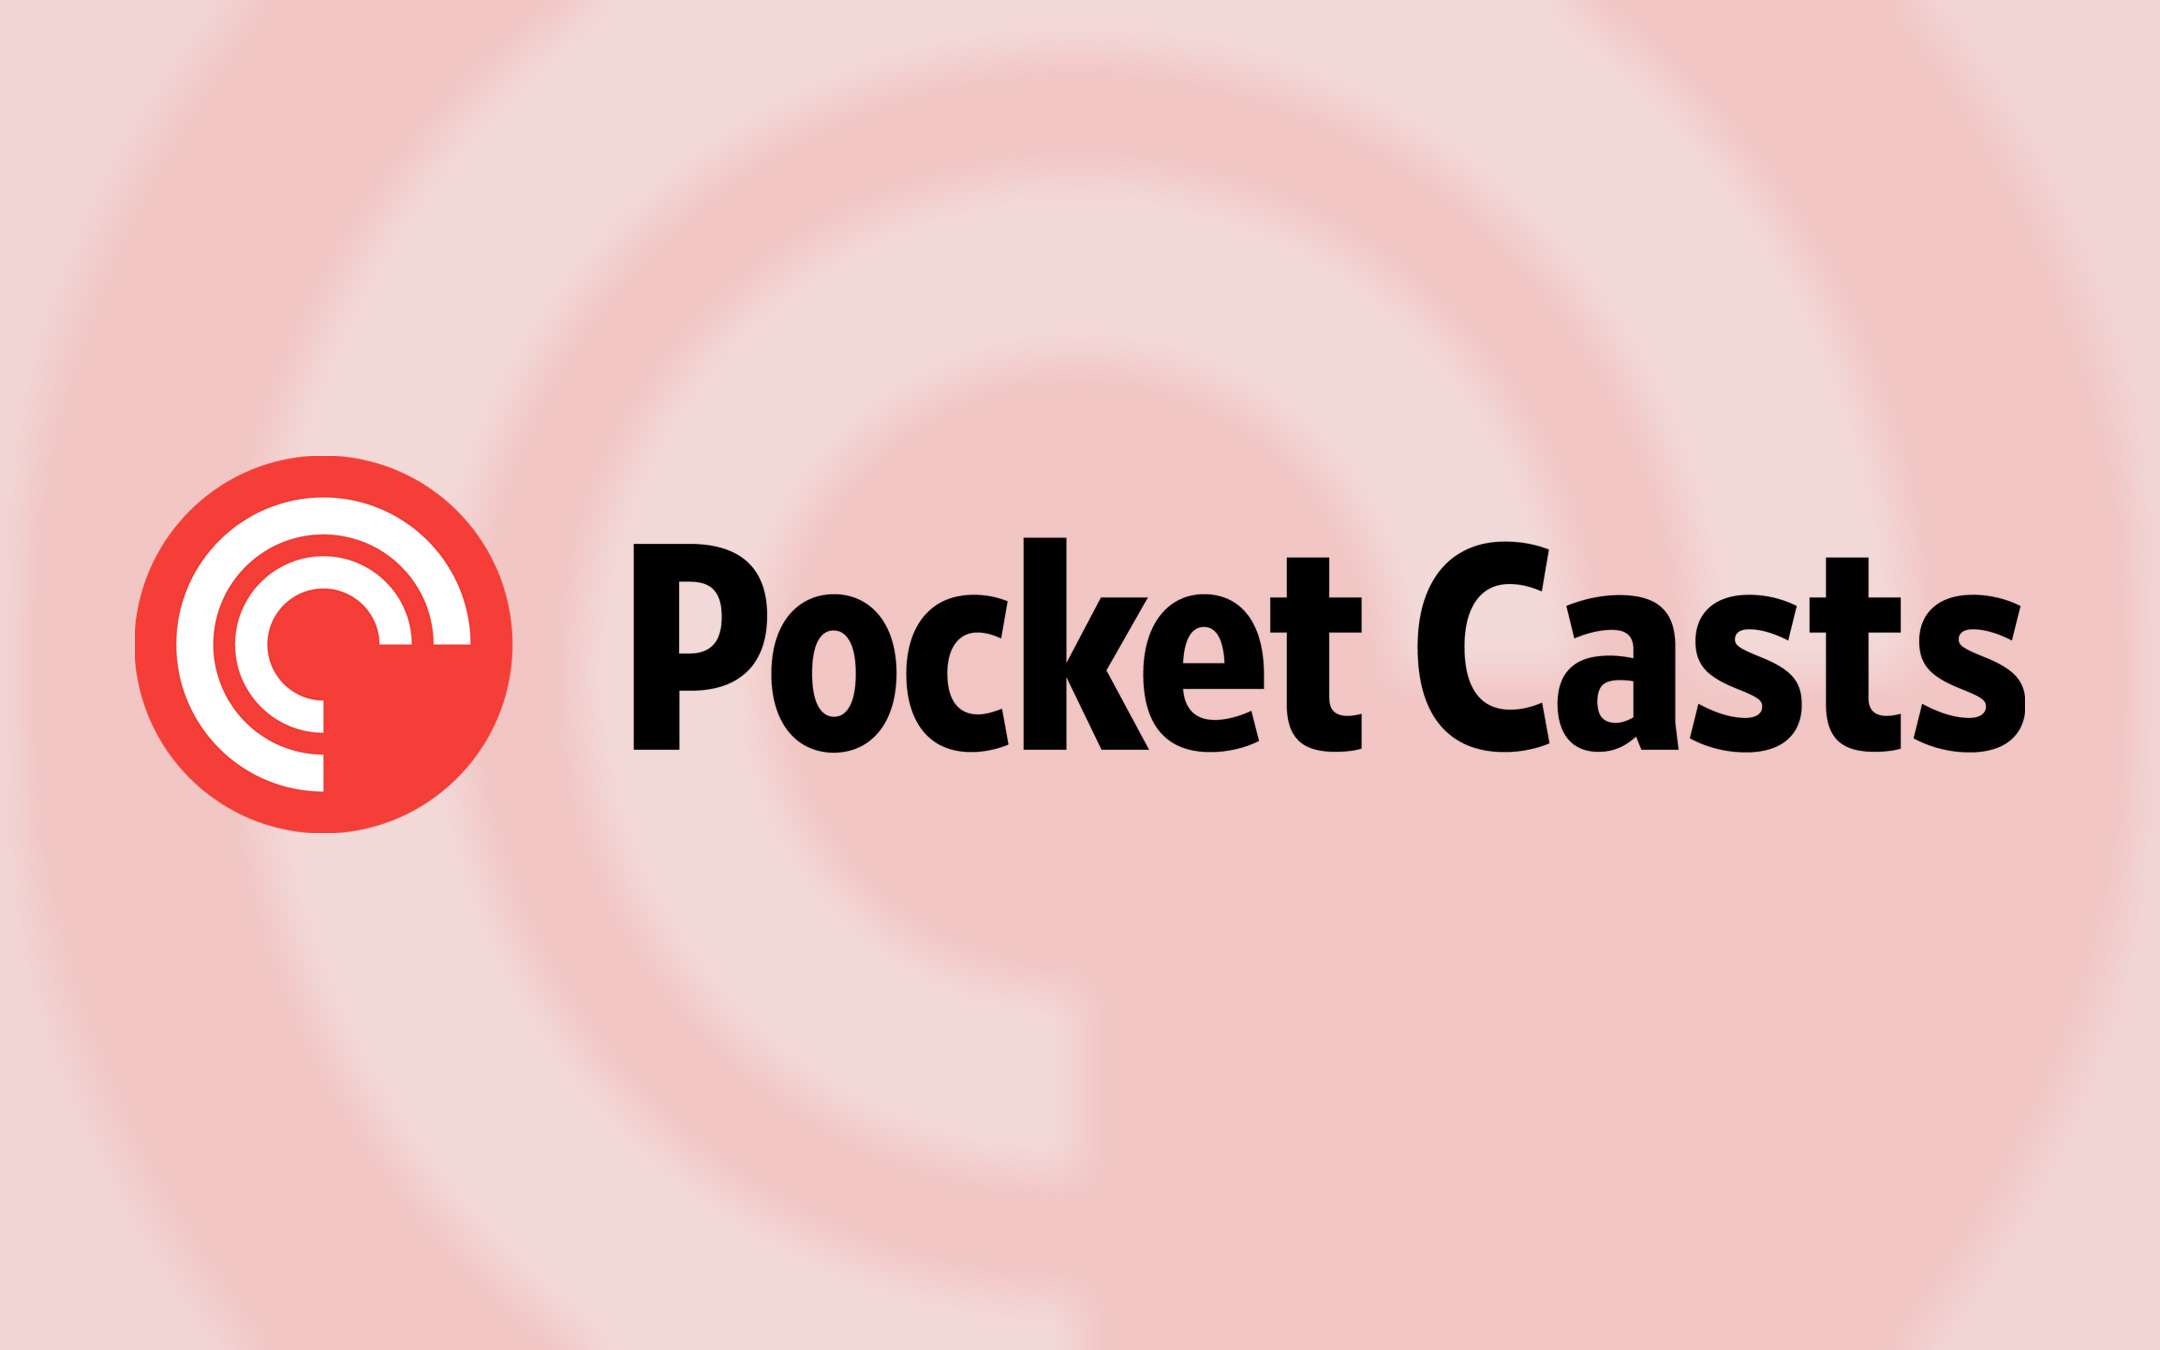 automattic tumblr buys app pocket casts